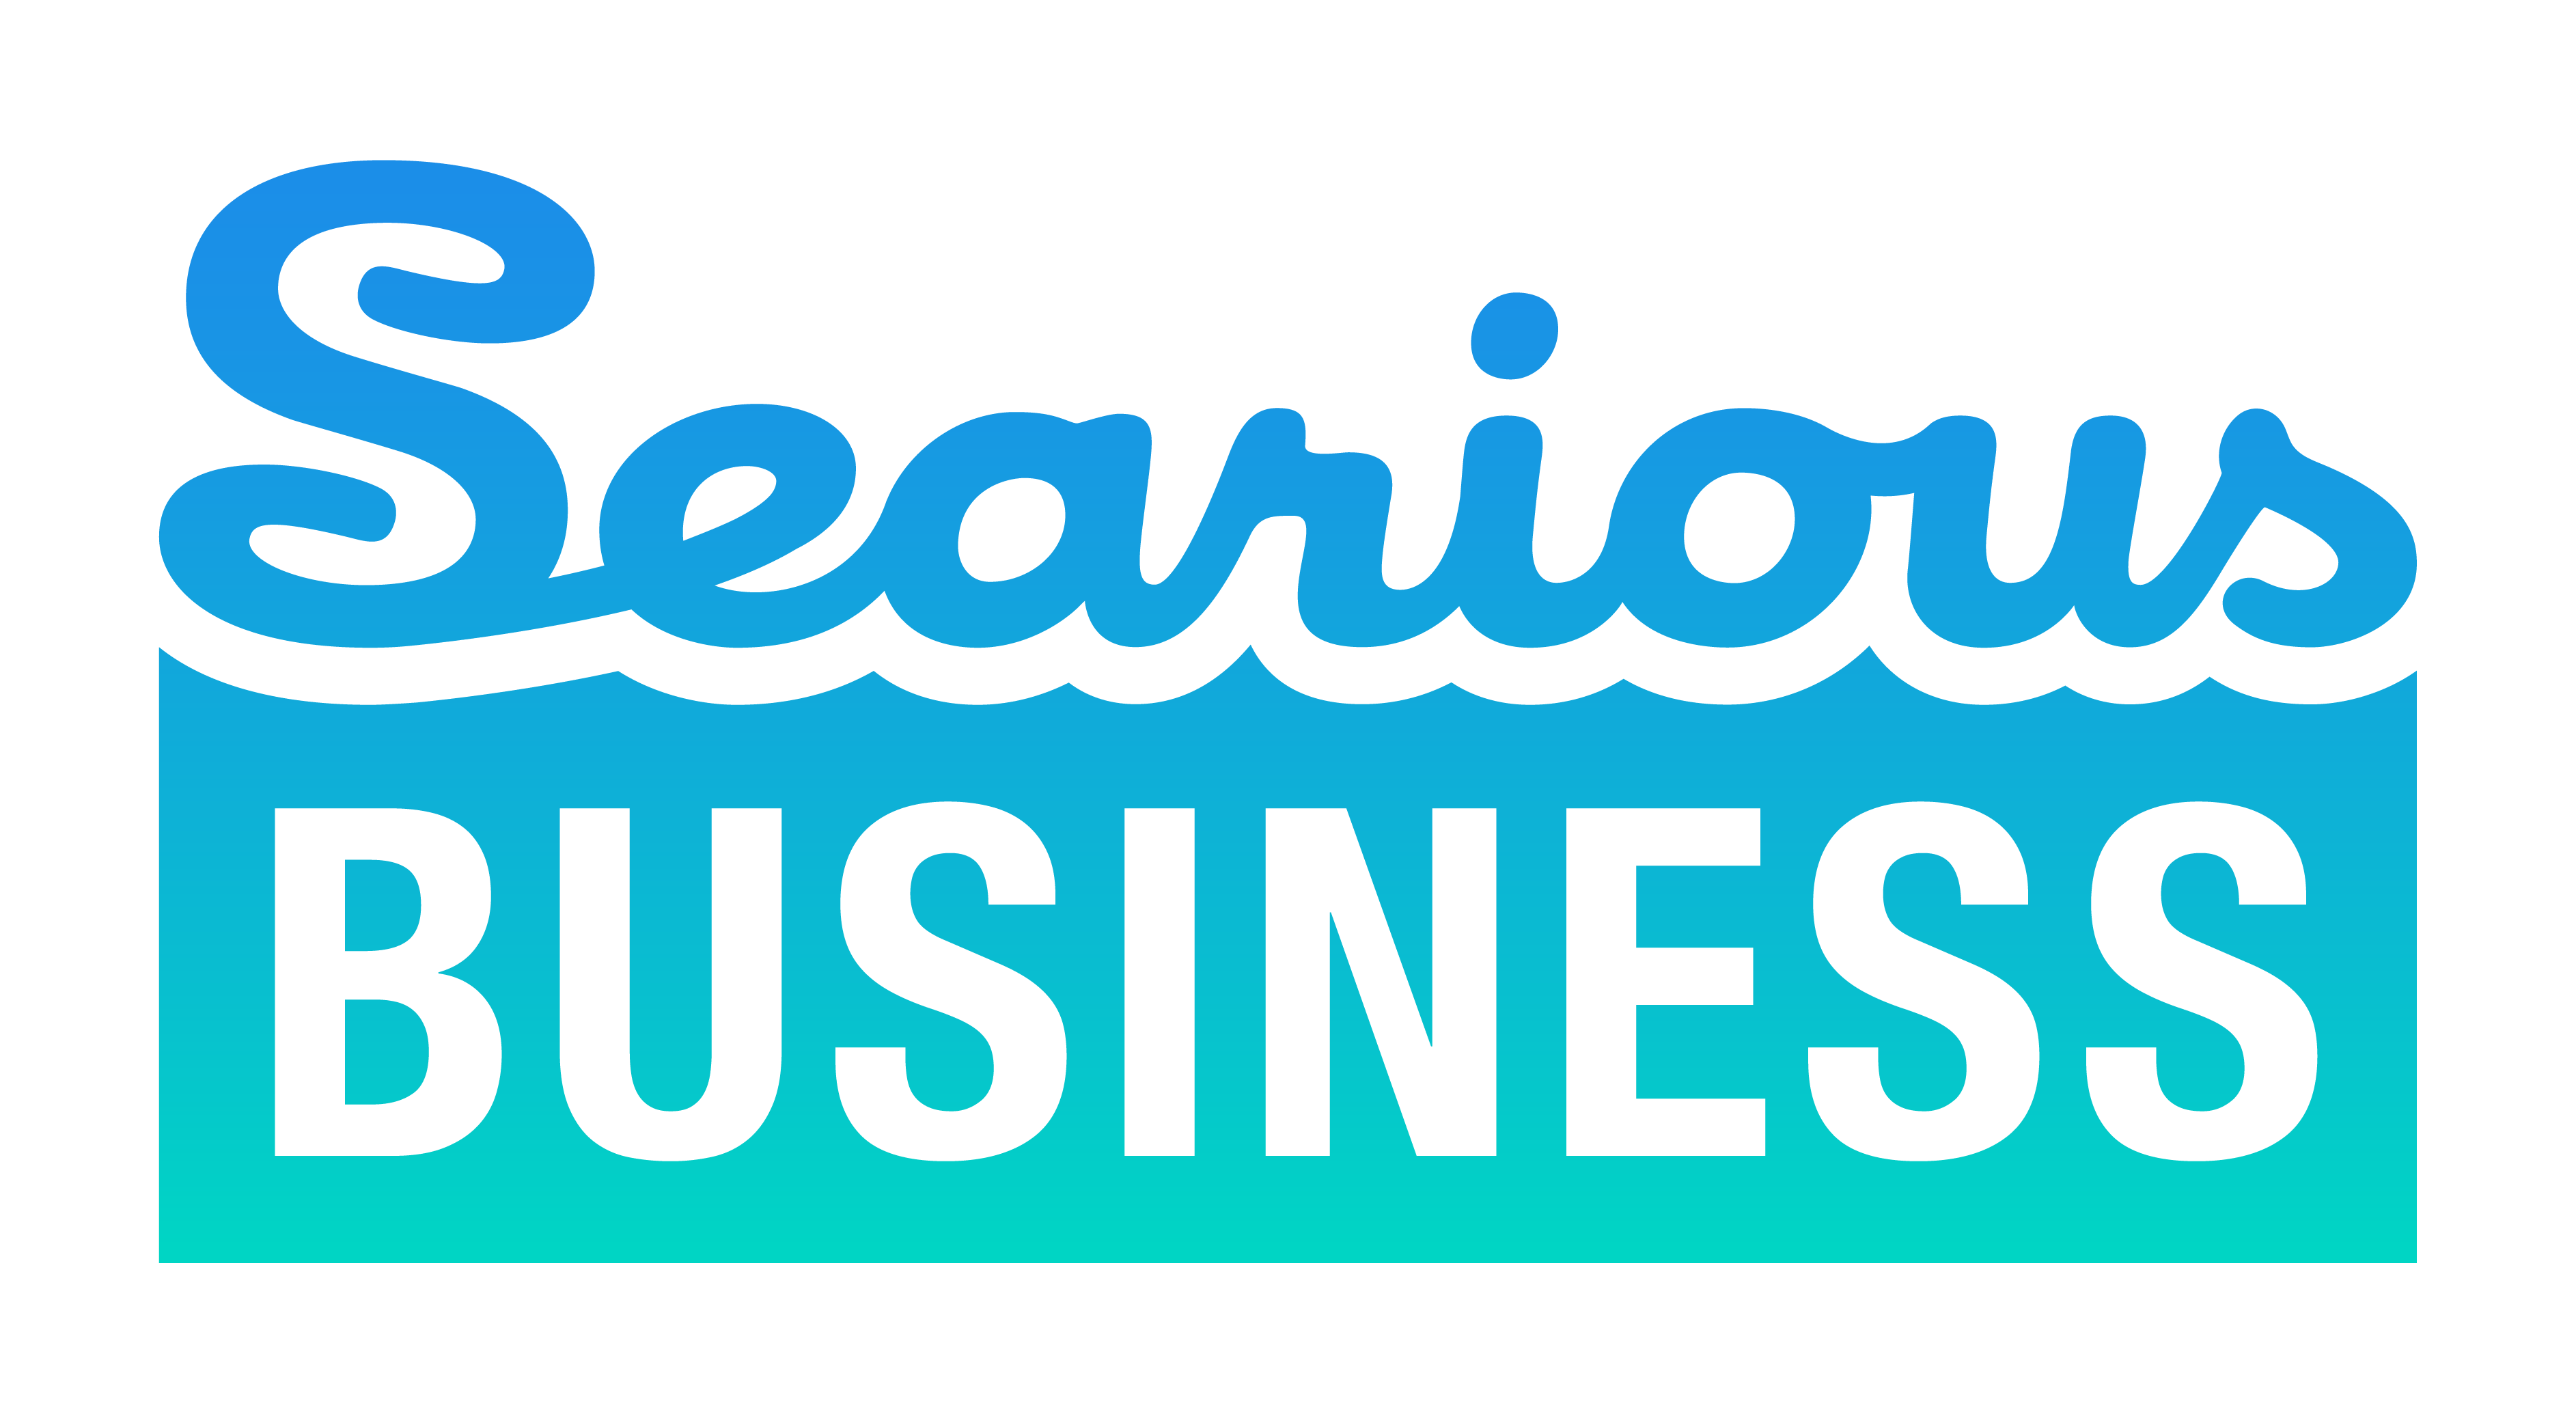 Searious Business logo